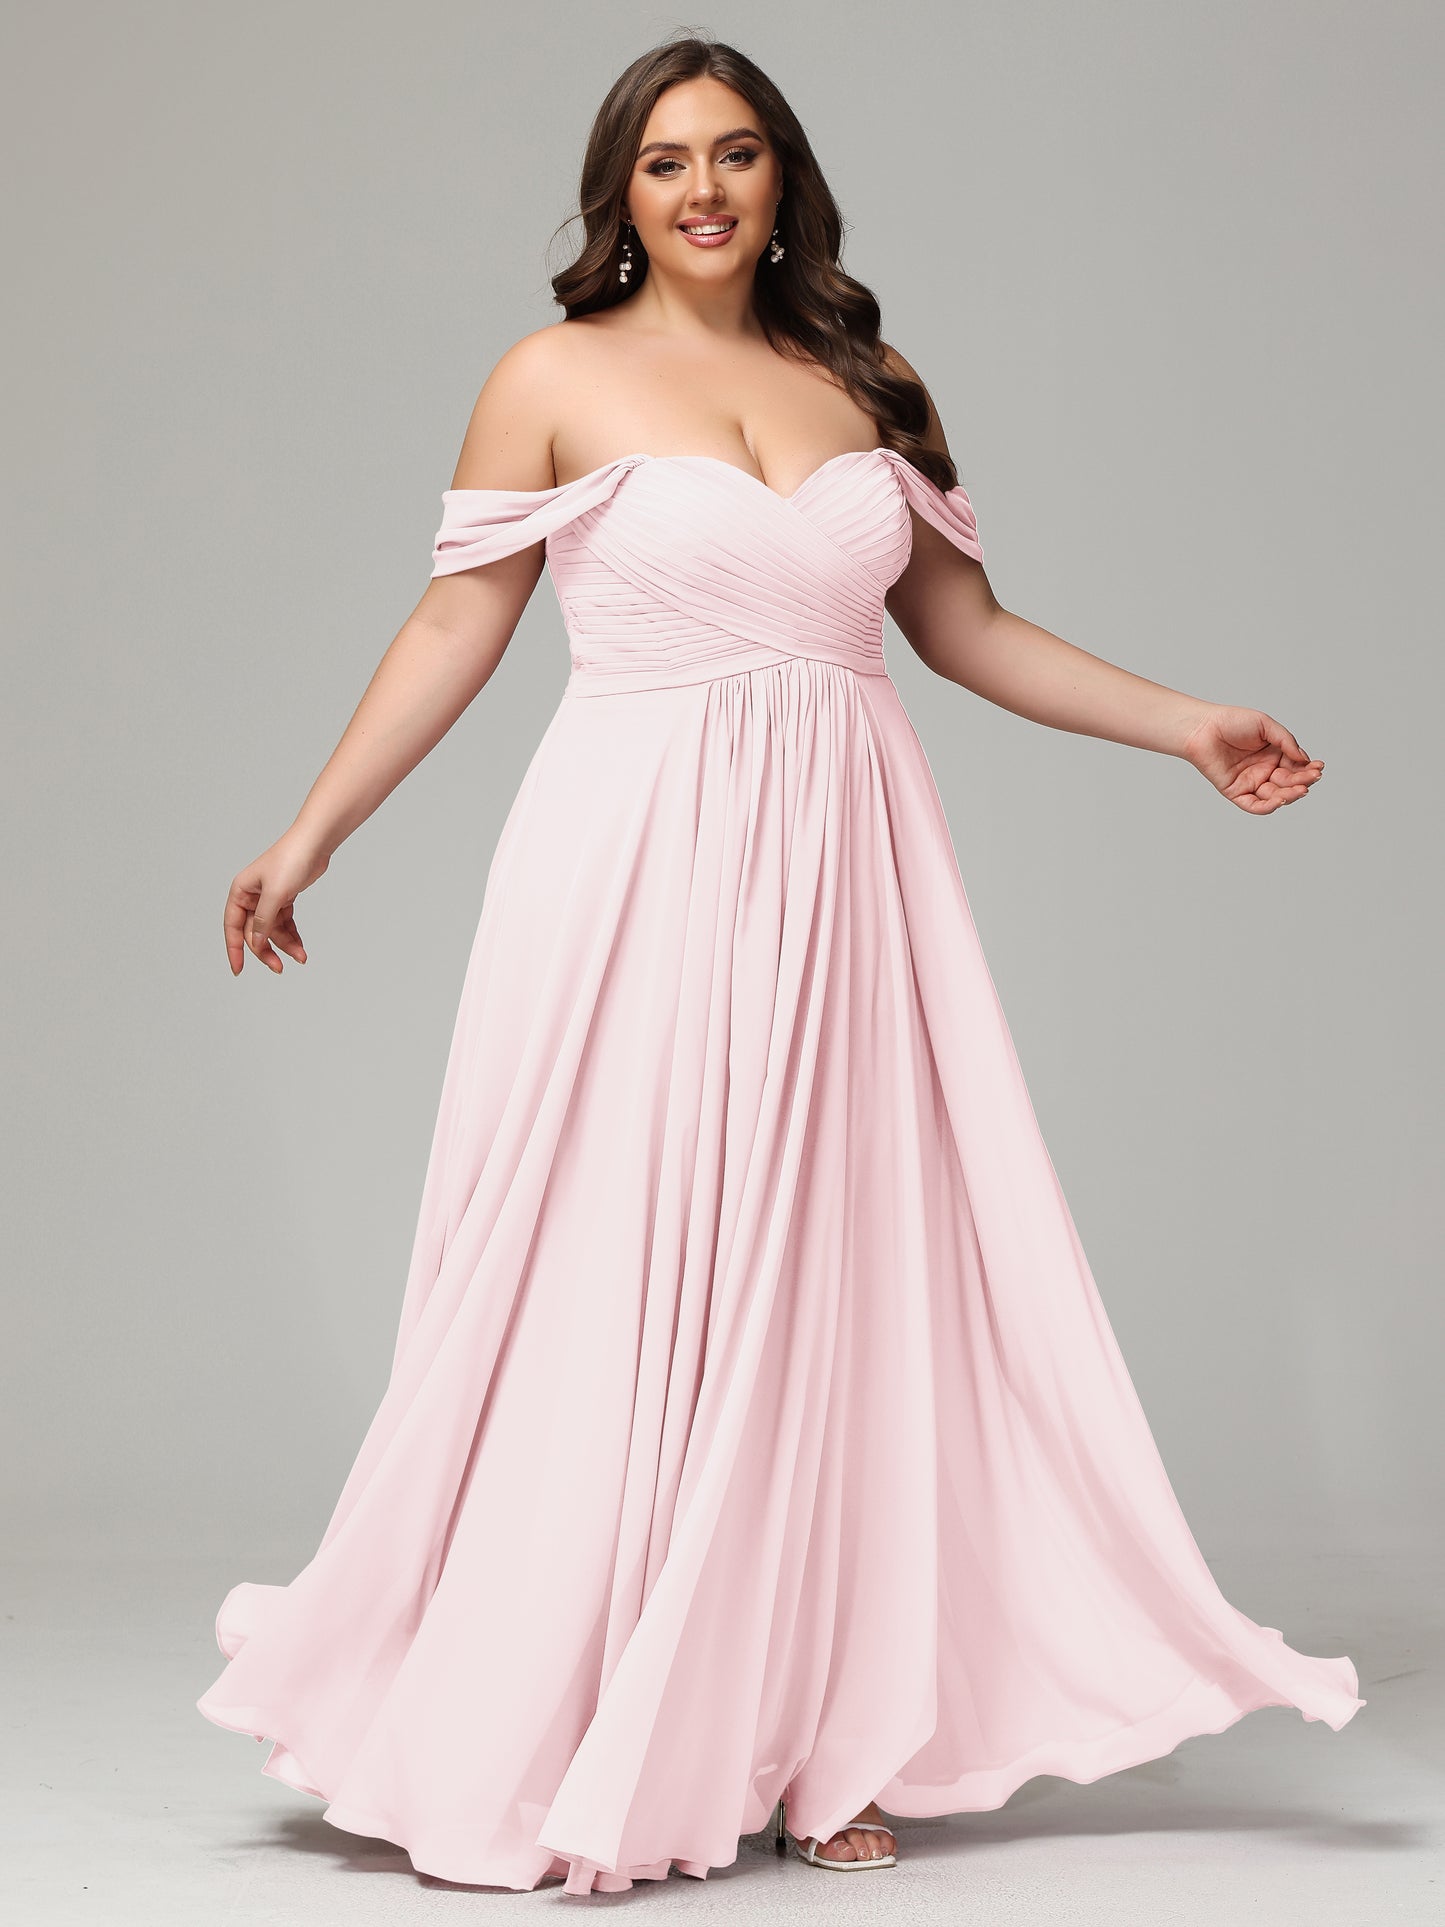 A-line Sweetheart neckline Chiffon-Bridesmaid Dress Plus Size